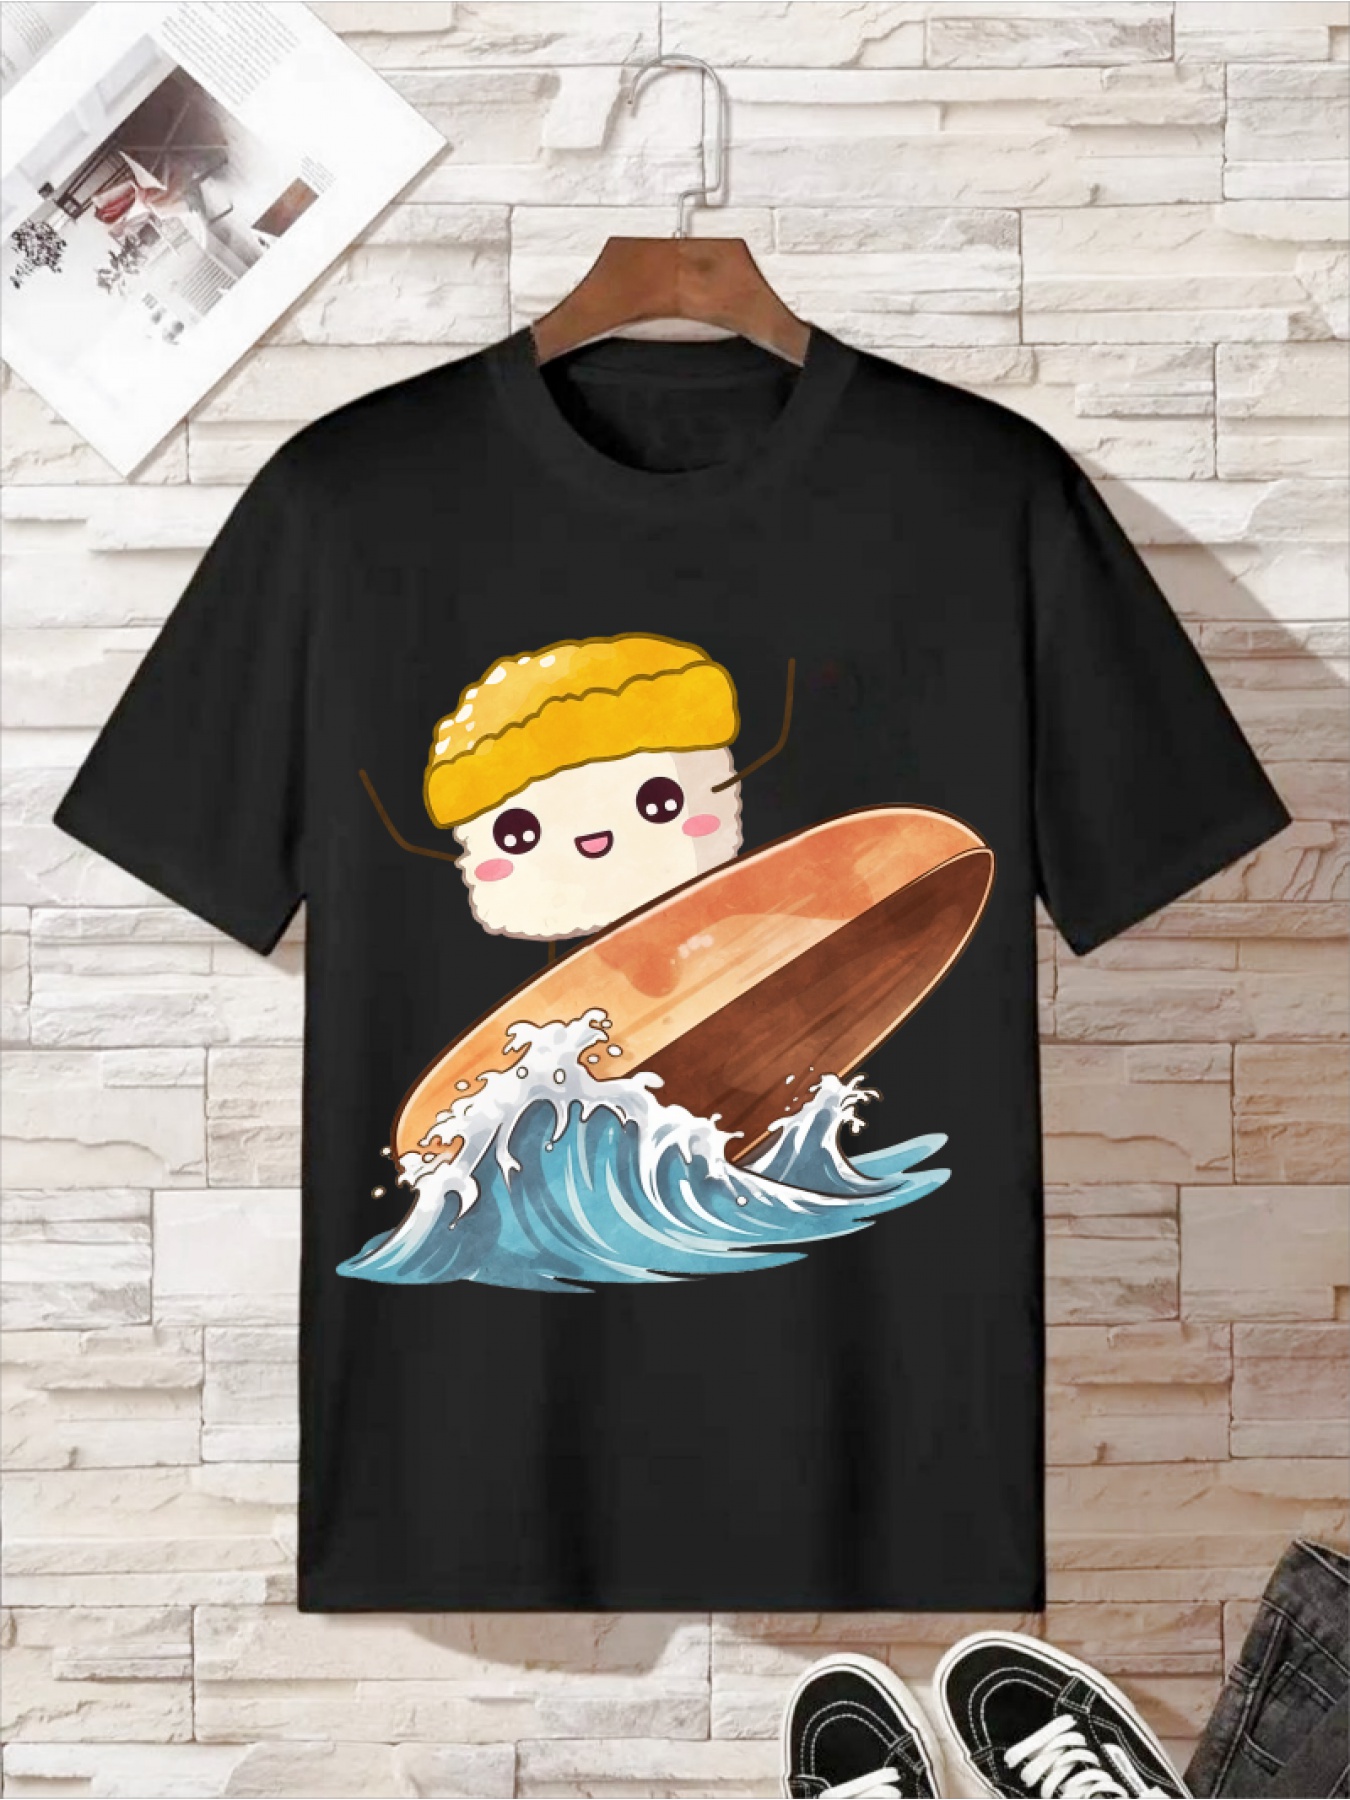 Sushi Surfers, Men's T-Shirt Regular